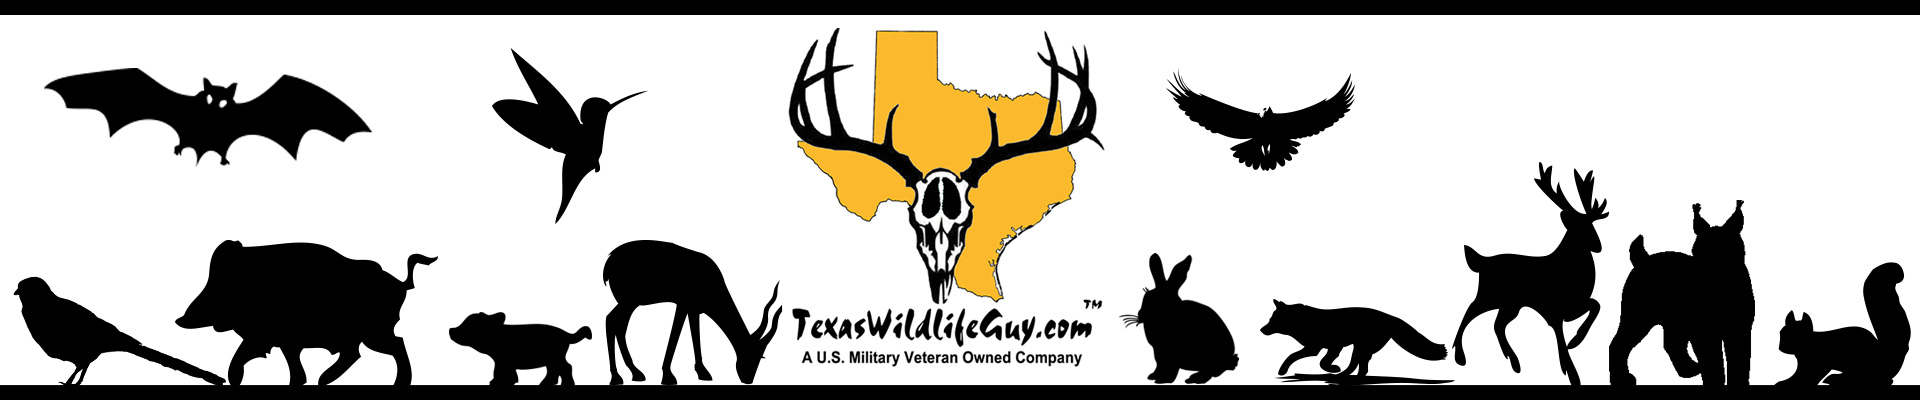 TexasWildlifeGuy.com - A U.S. Military Veteran Owned Company.